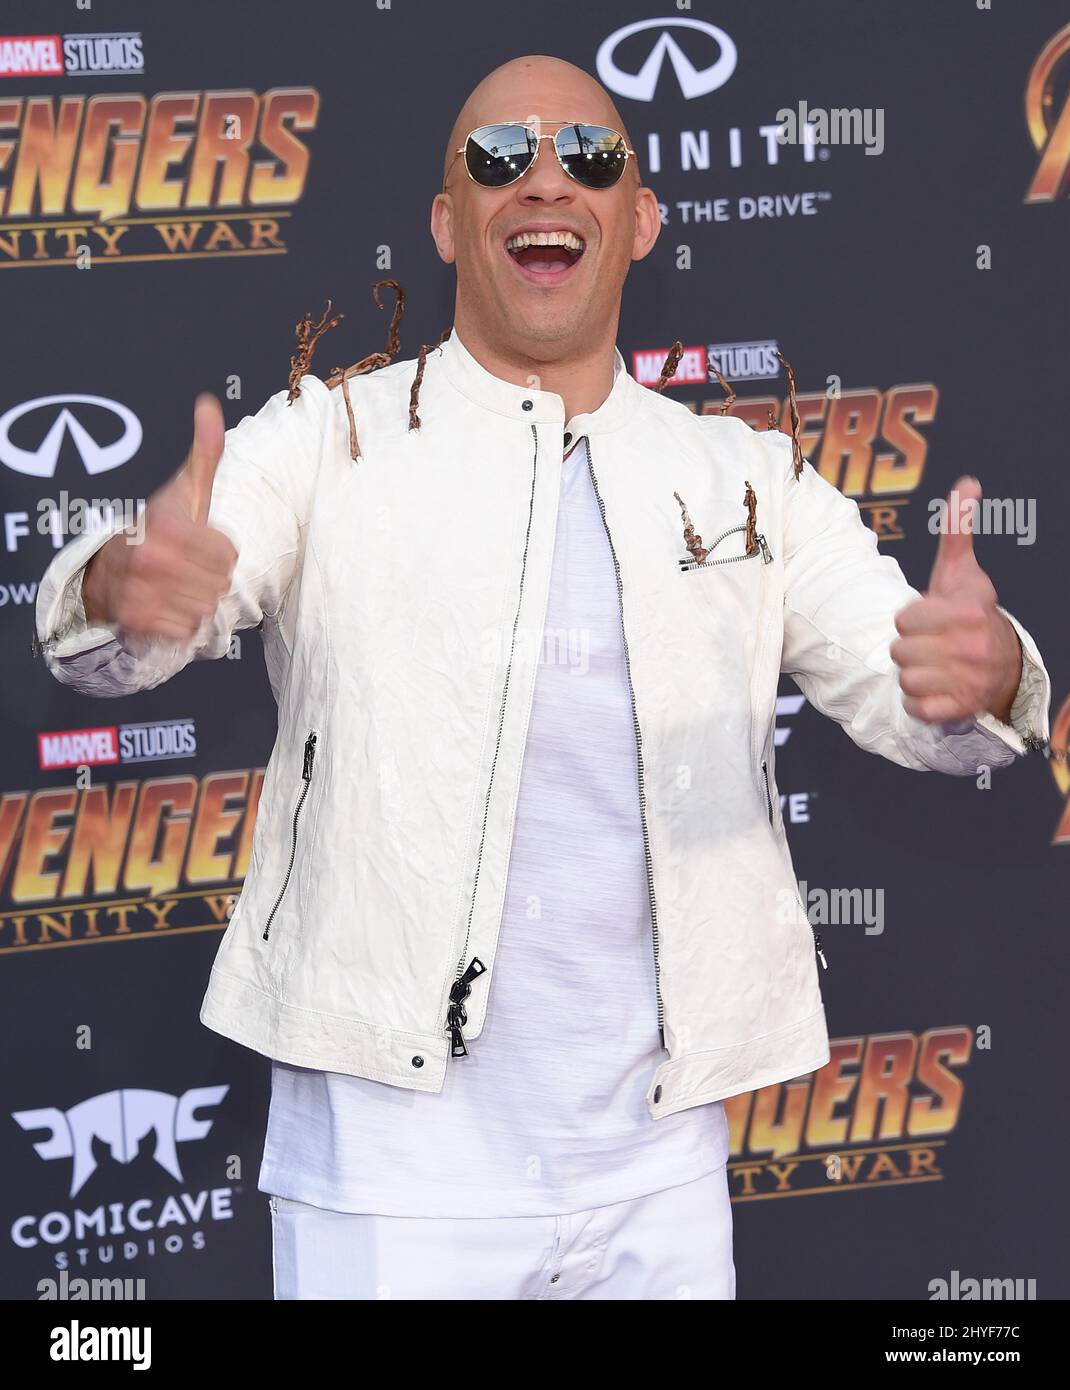 VIN Diesel partecipa alla prima mondiale di Avengers: Infinity War, tenutasi al Teatro El Capitan di Hollywood, California Foto Stock